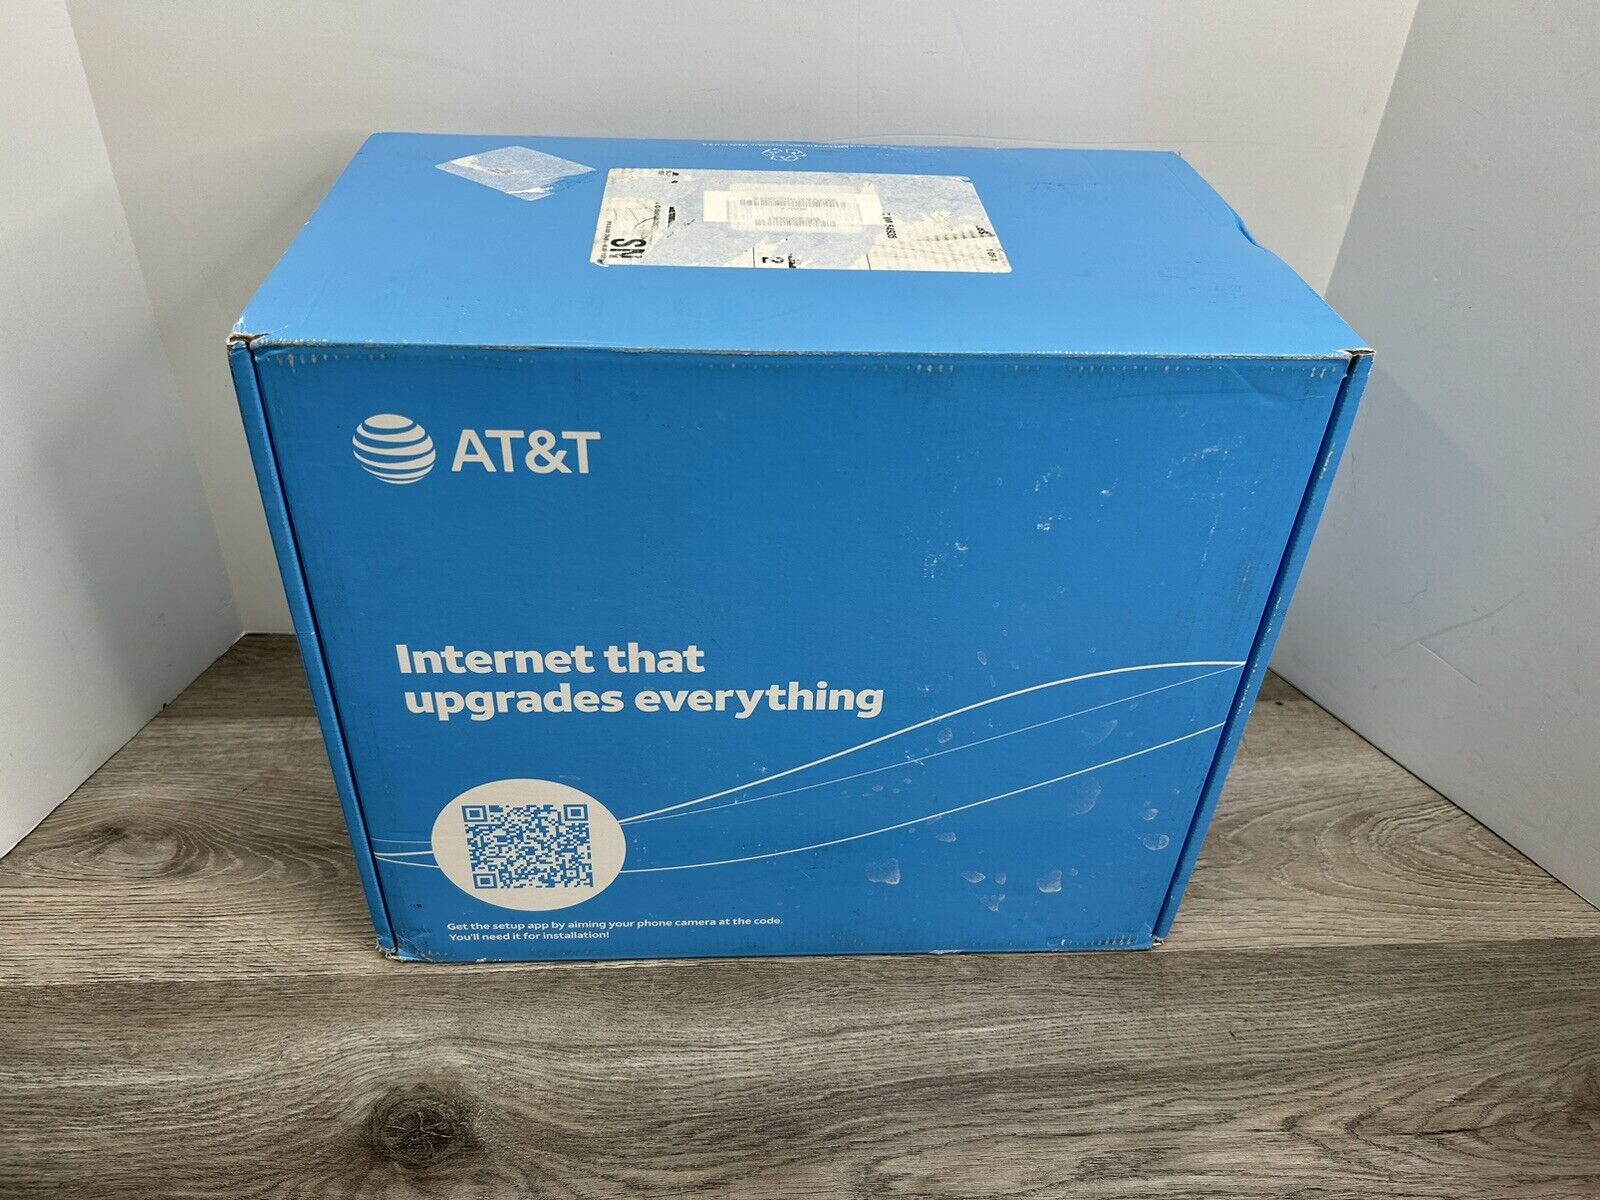 AT&T All-Fi Hub Internet Air Model CGW450-400 *Power Tested - Works*